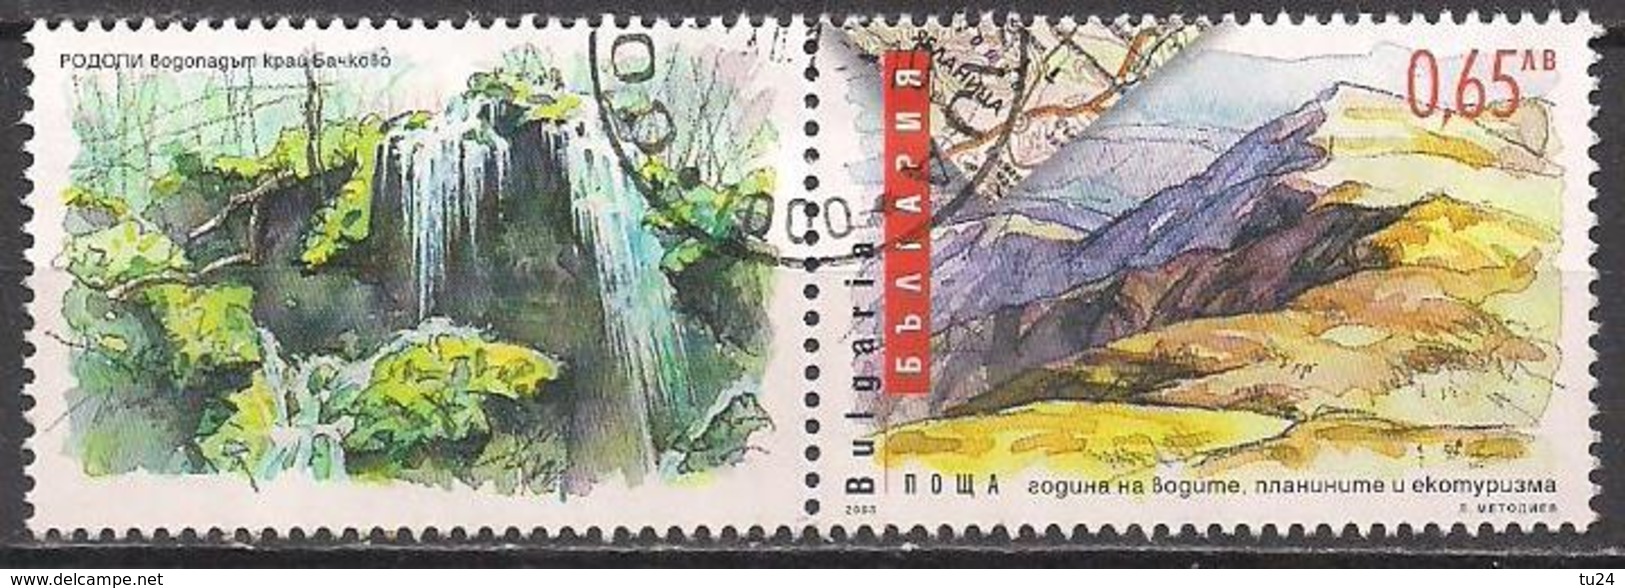 Bulgarien  (2003)  Mi.Nr.  4610  Gest. / Used  (6ac29) - Used Stamps